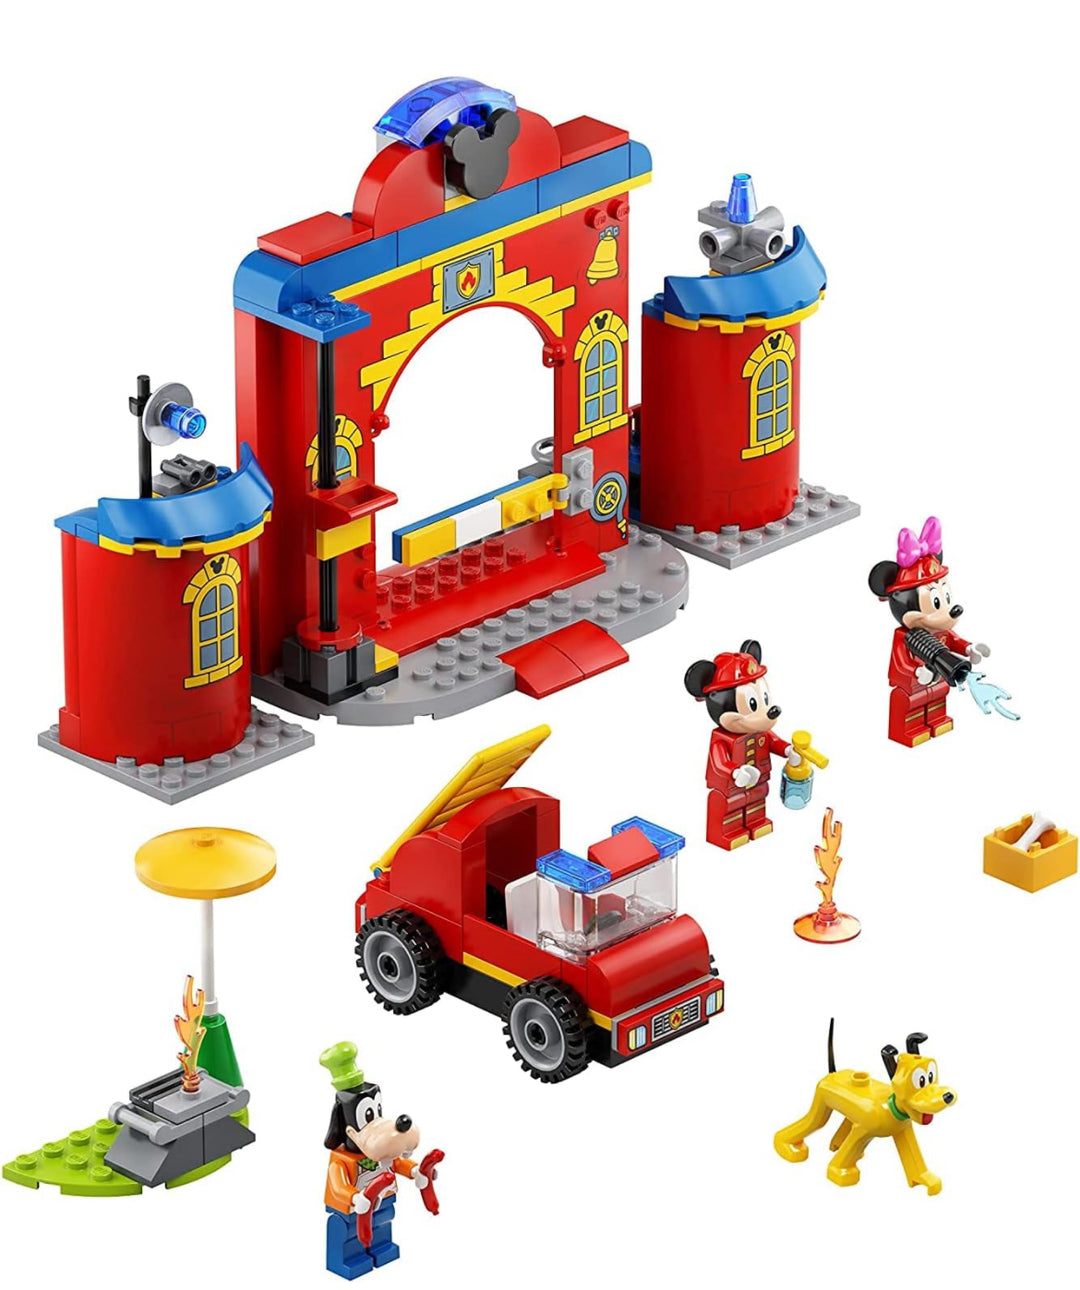 LEGO Disney- Kit de construcción de Mickey & Friends Fire Truck & Station 10776